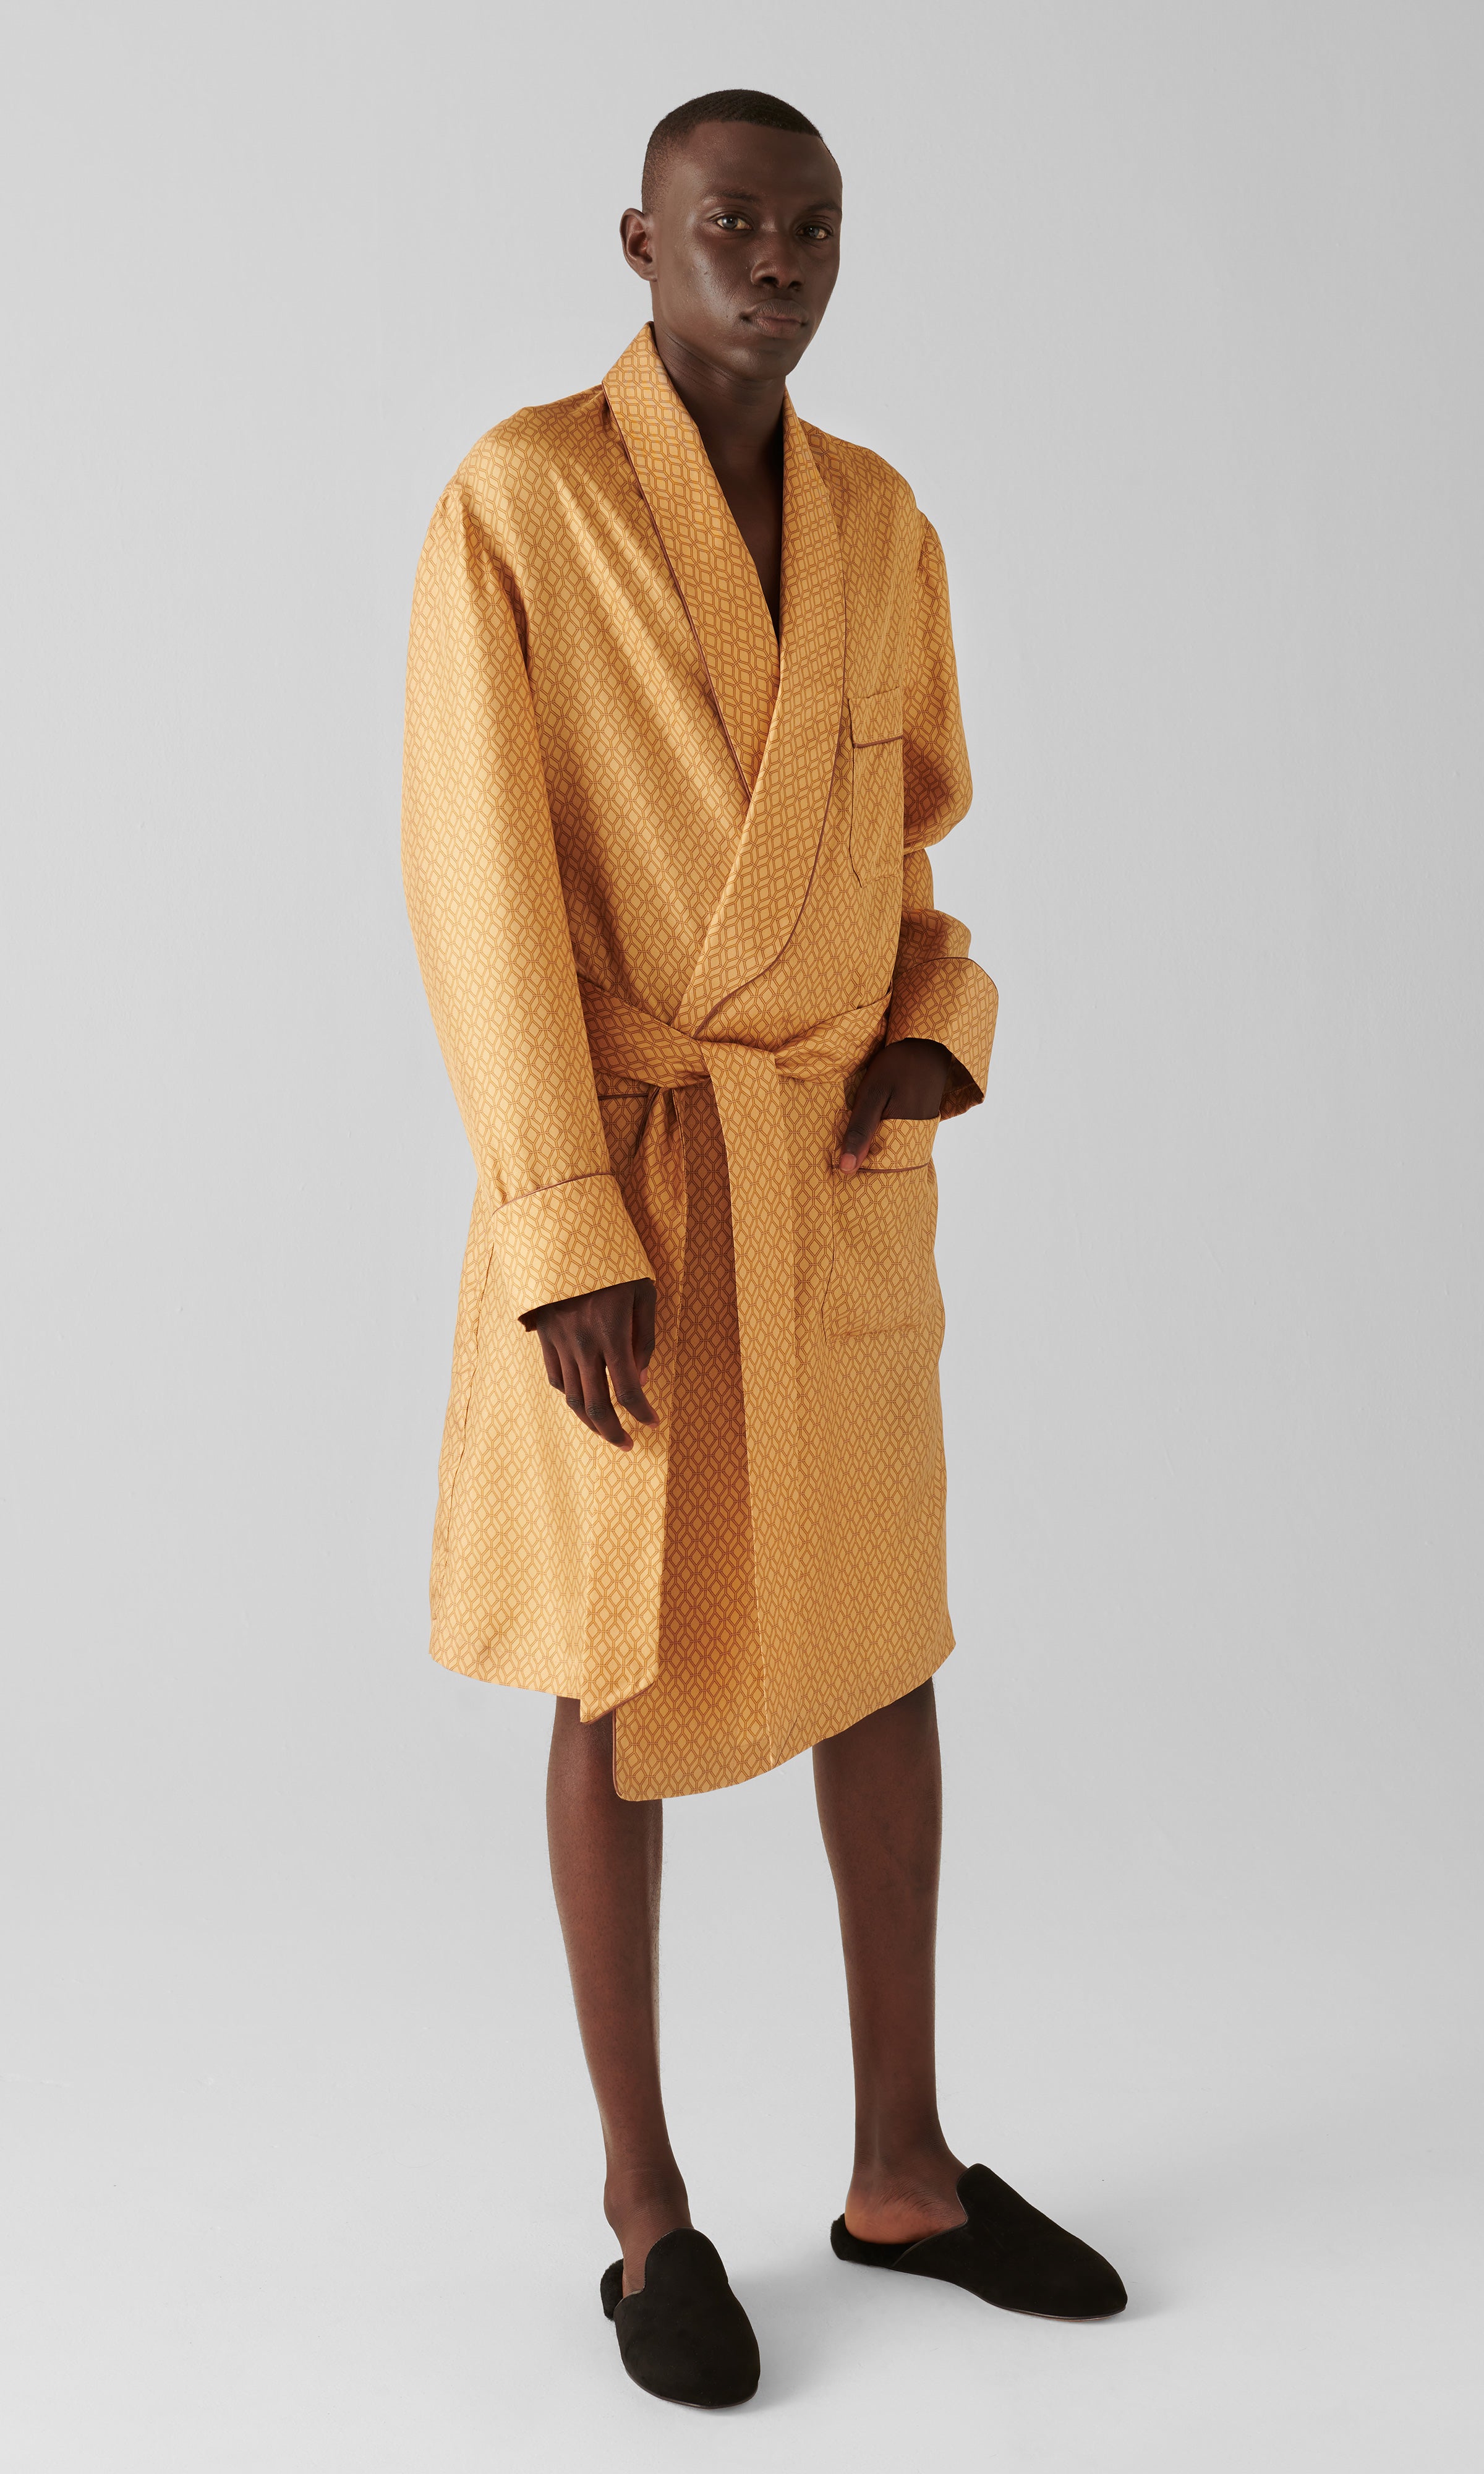 Men's silk robe by Almeta